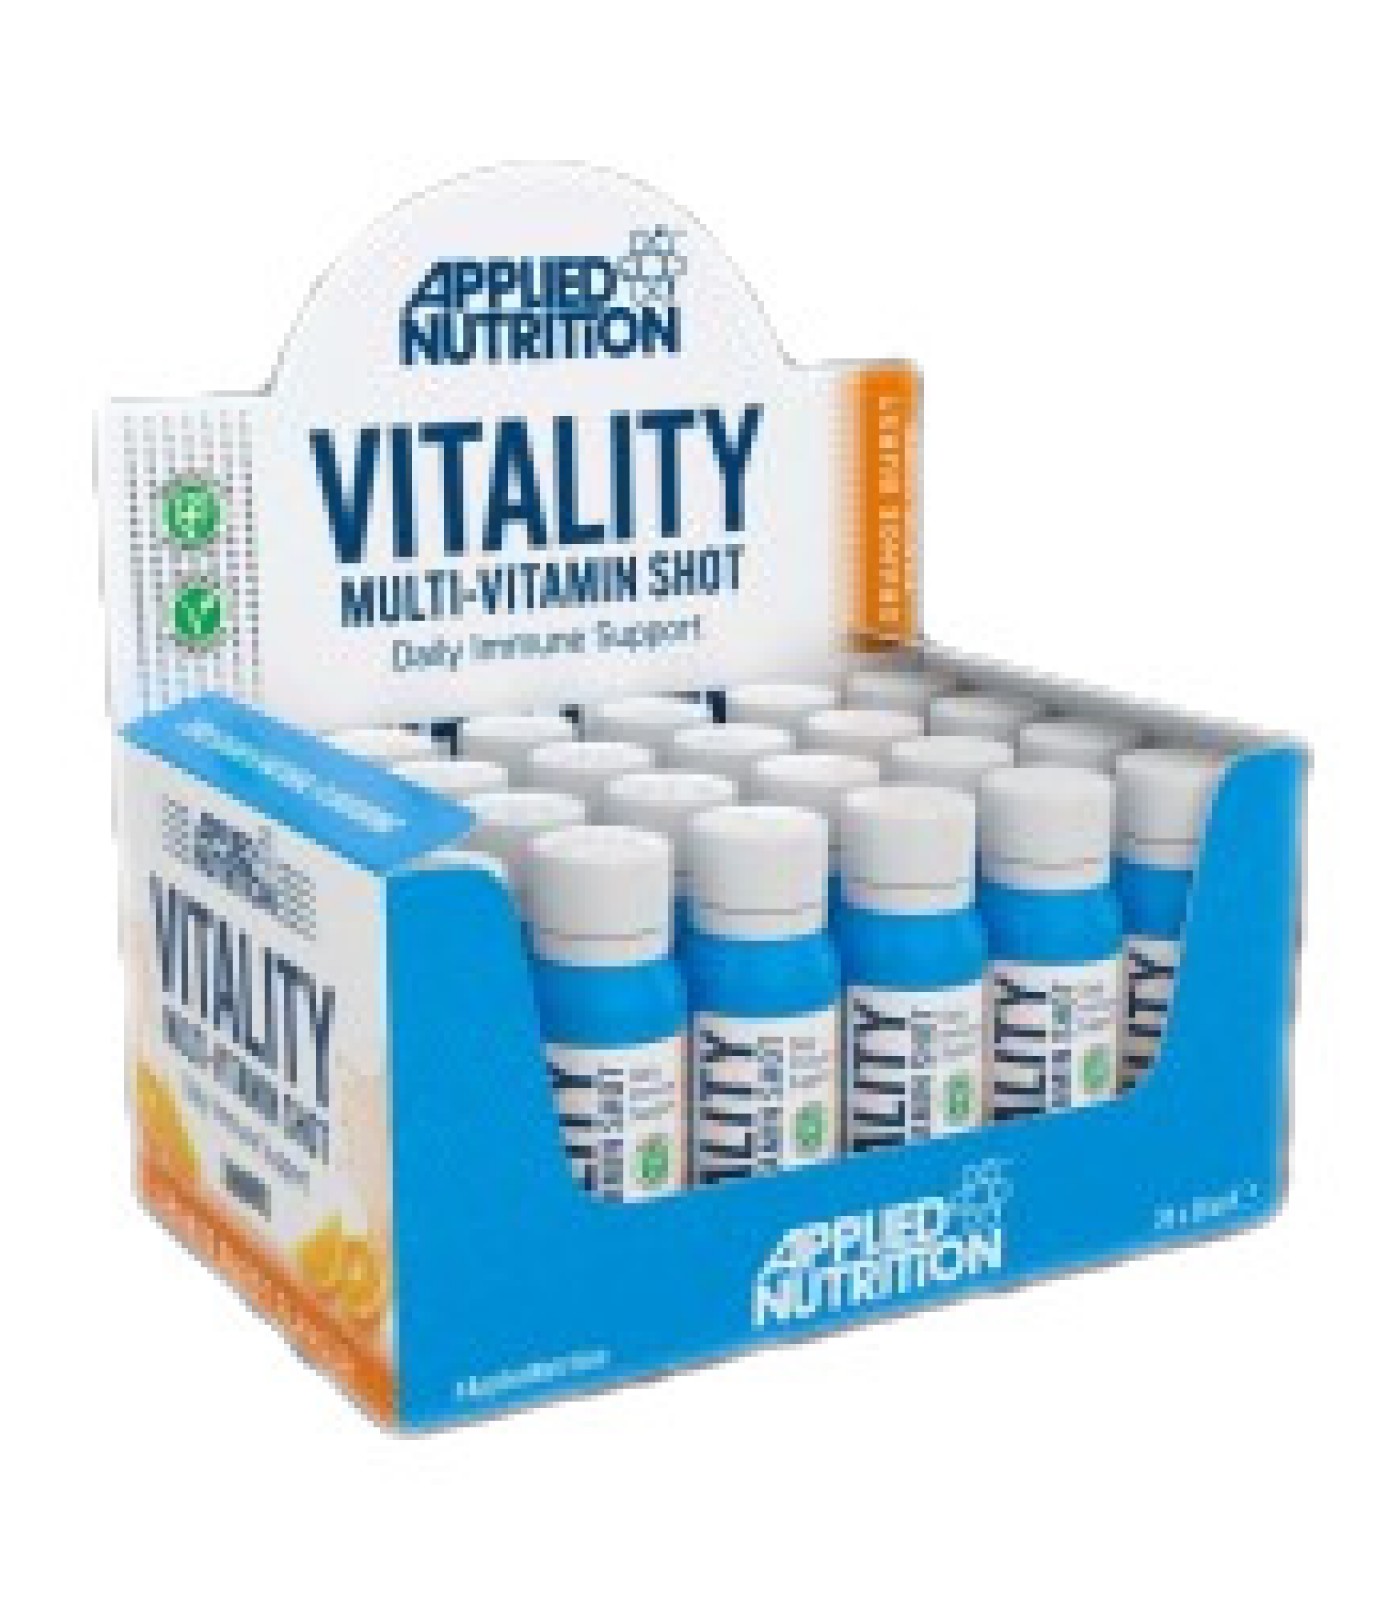 Applied Nutrition - Vitality Multi-Vitamin Shot / 38 мл, 24 дози